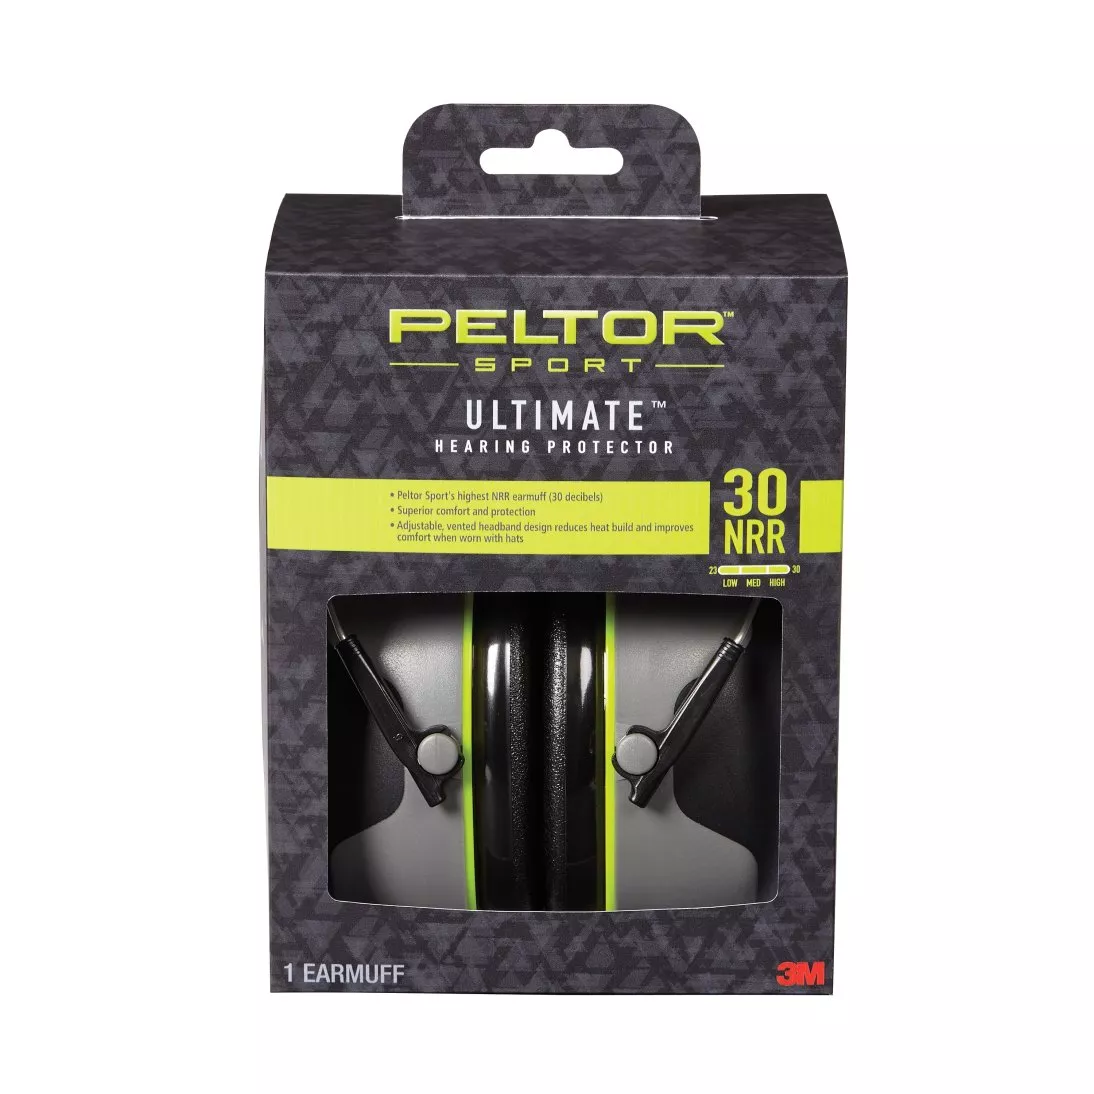 Peltor™ Sport Ultimate™ Hearing Protector, 97042-PEL-6C, 30 NRR
Black/Gray